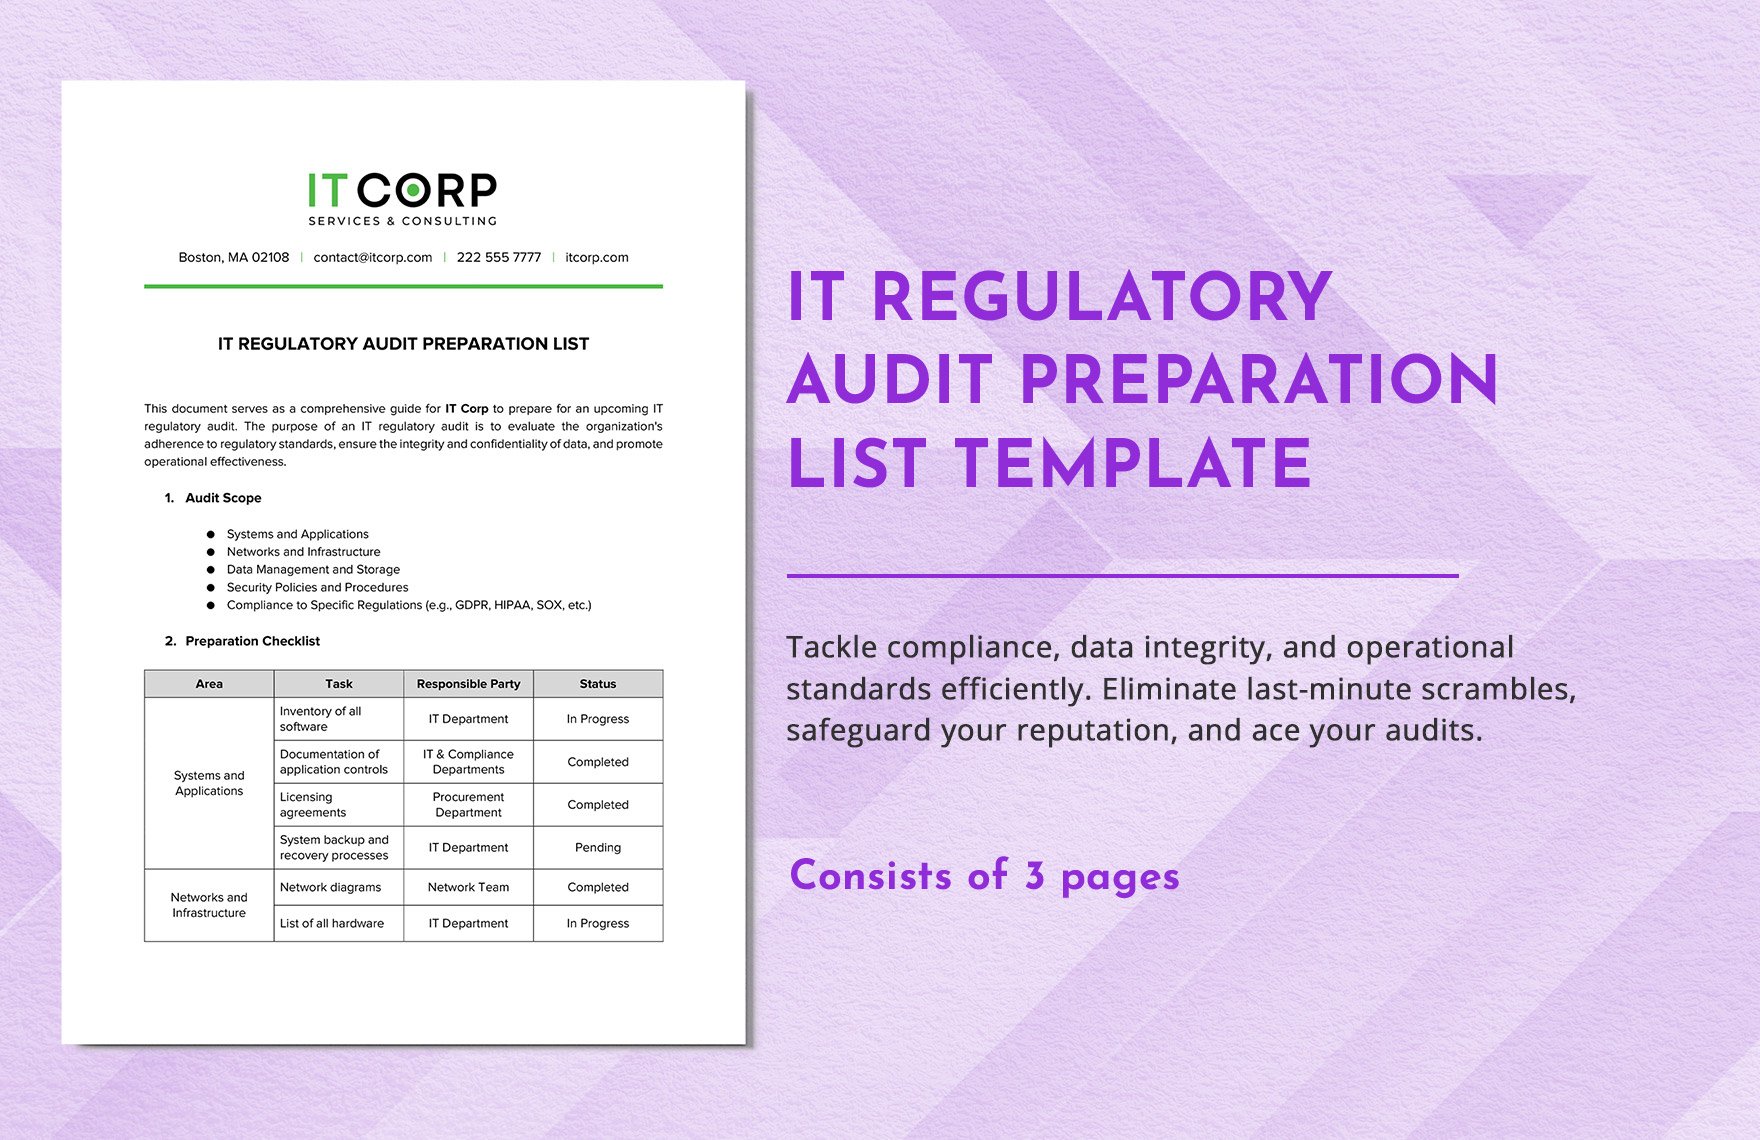 IT Regulatory Audit Preparation List Template